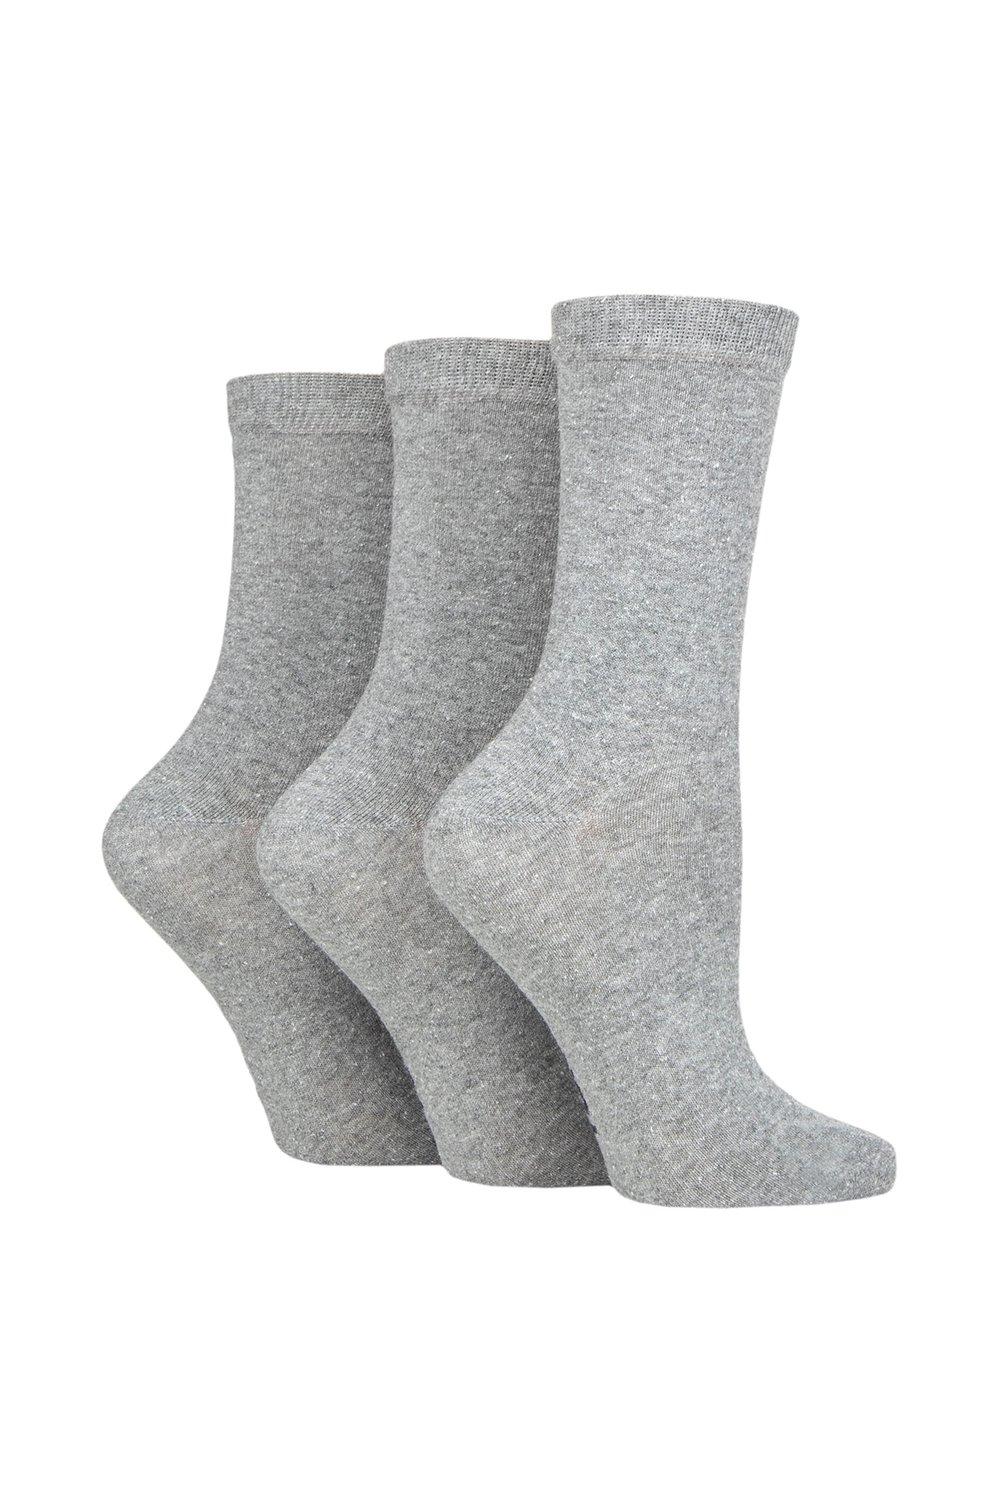 3 Pair 100% Recycled Plain Cotton Socks